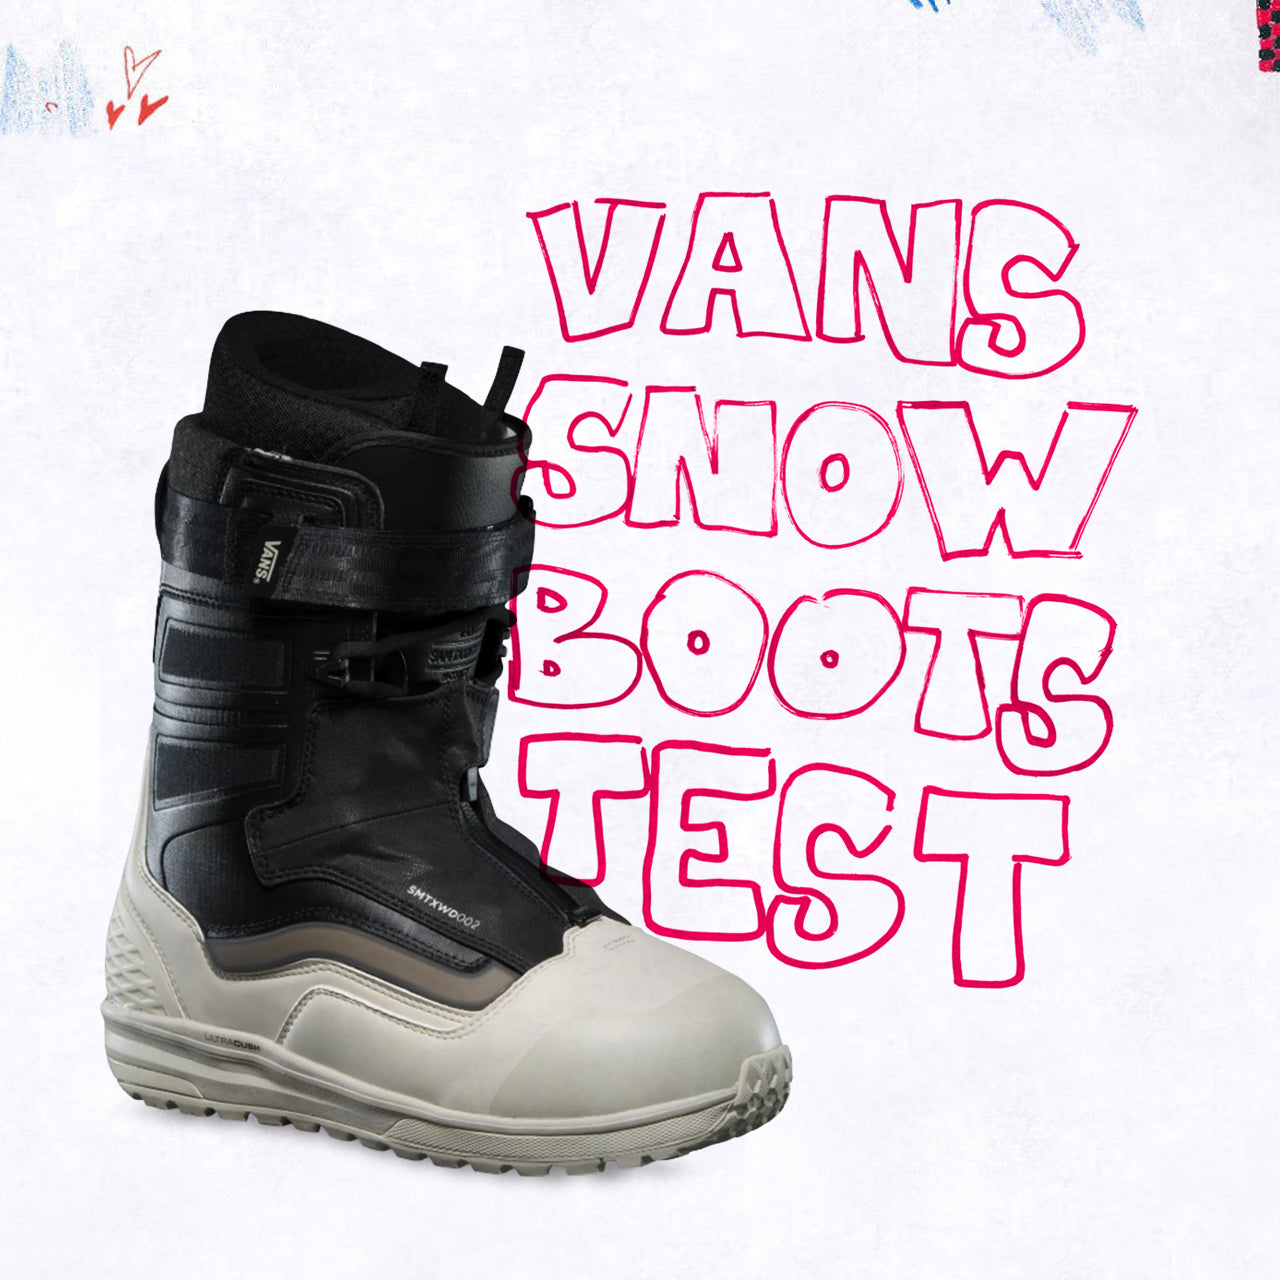 VANS SNOW BOOTS WEAR TEST!